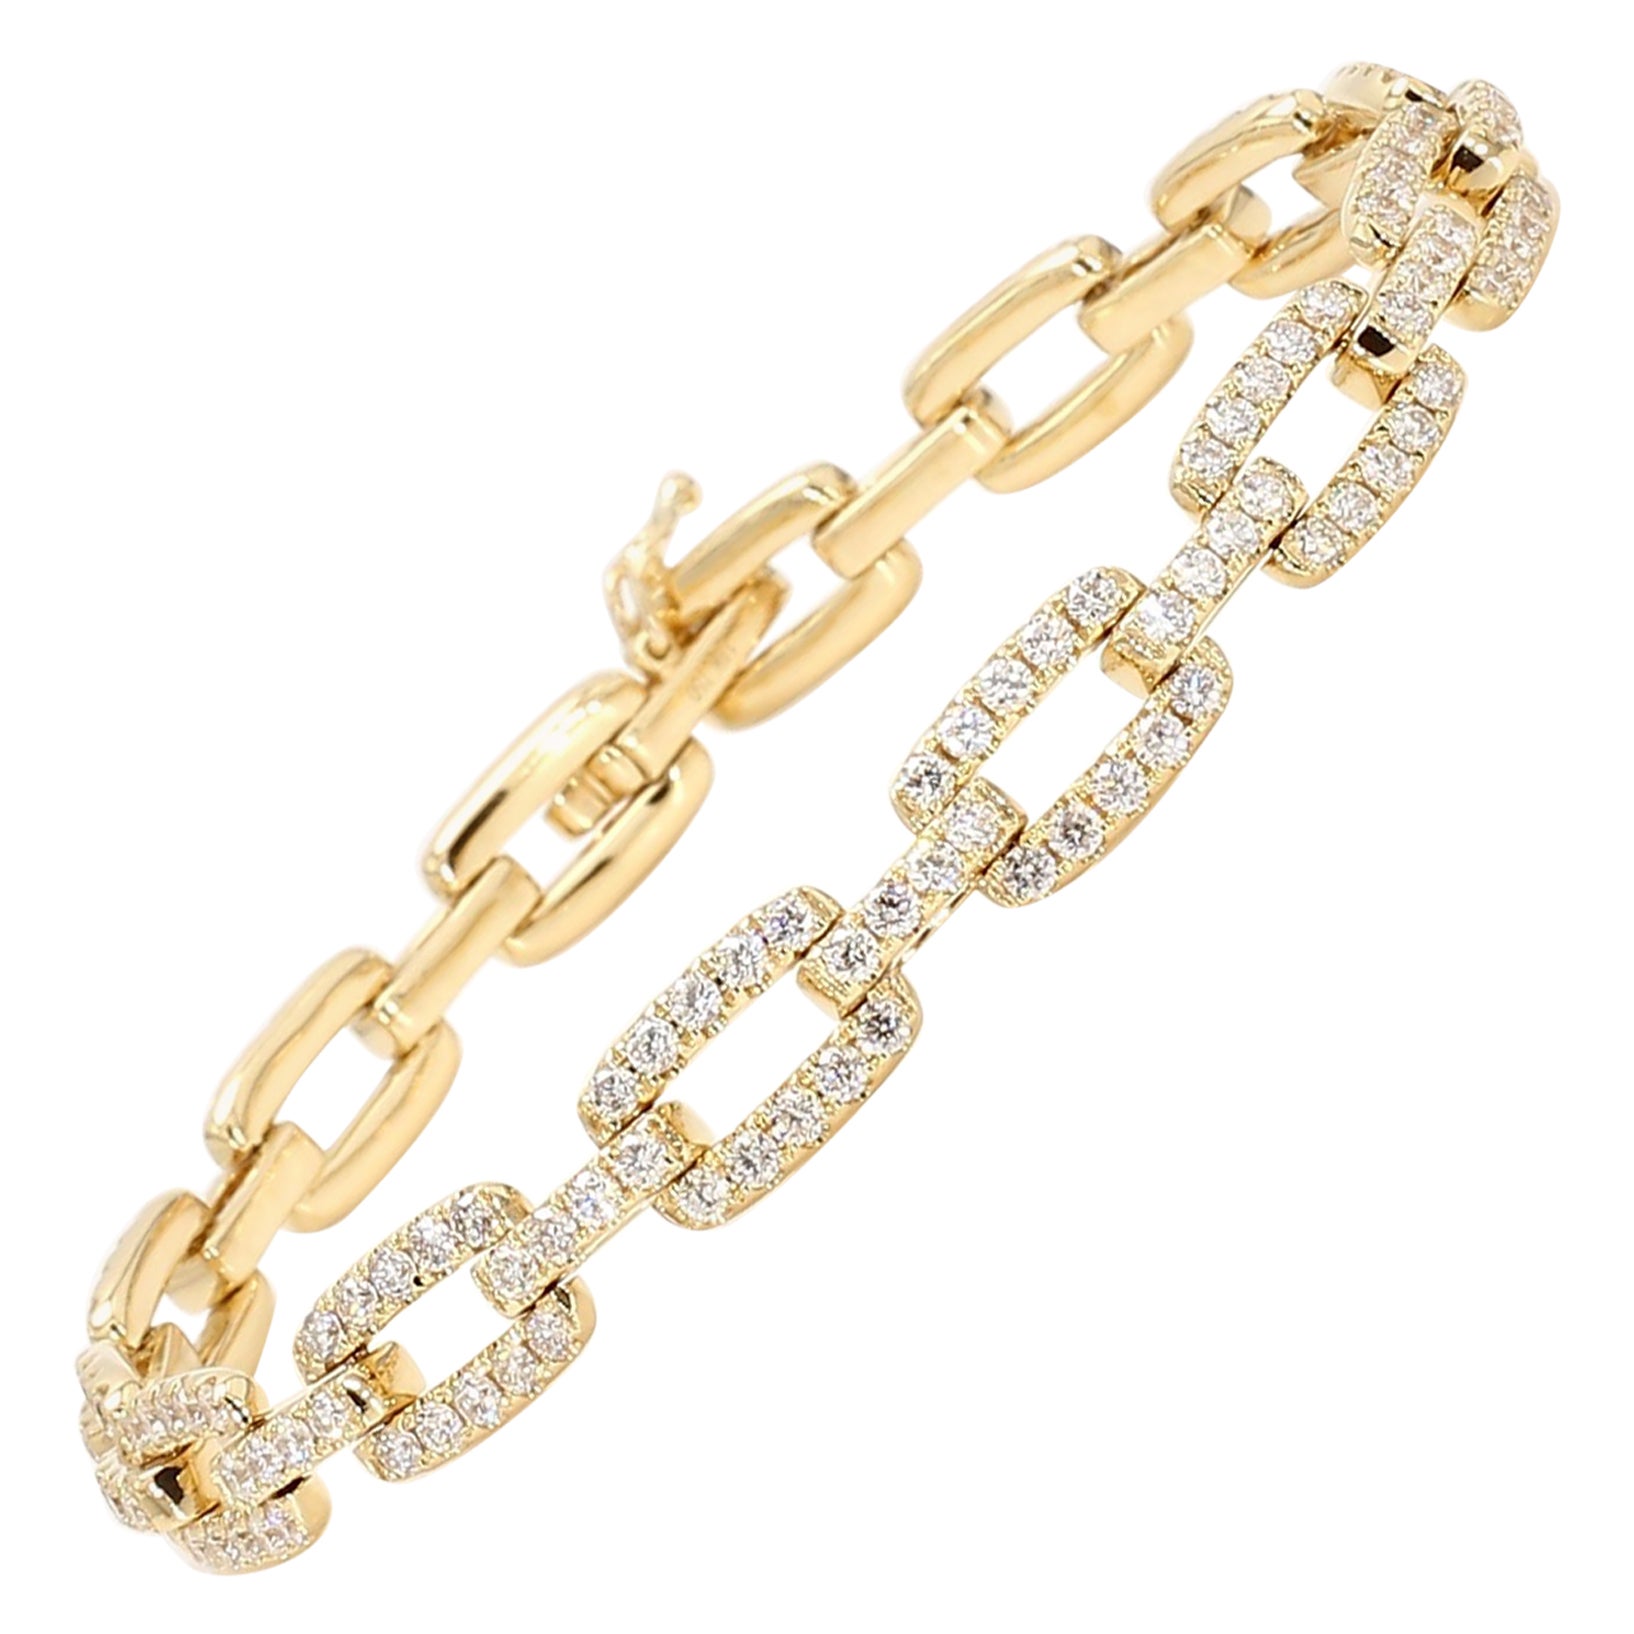 Natural White Round Diamond 3.24 Carat TW Yellow Gold Link Bracelet